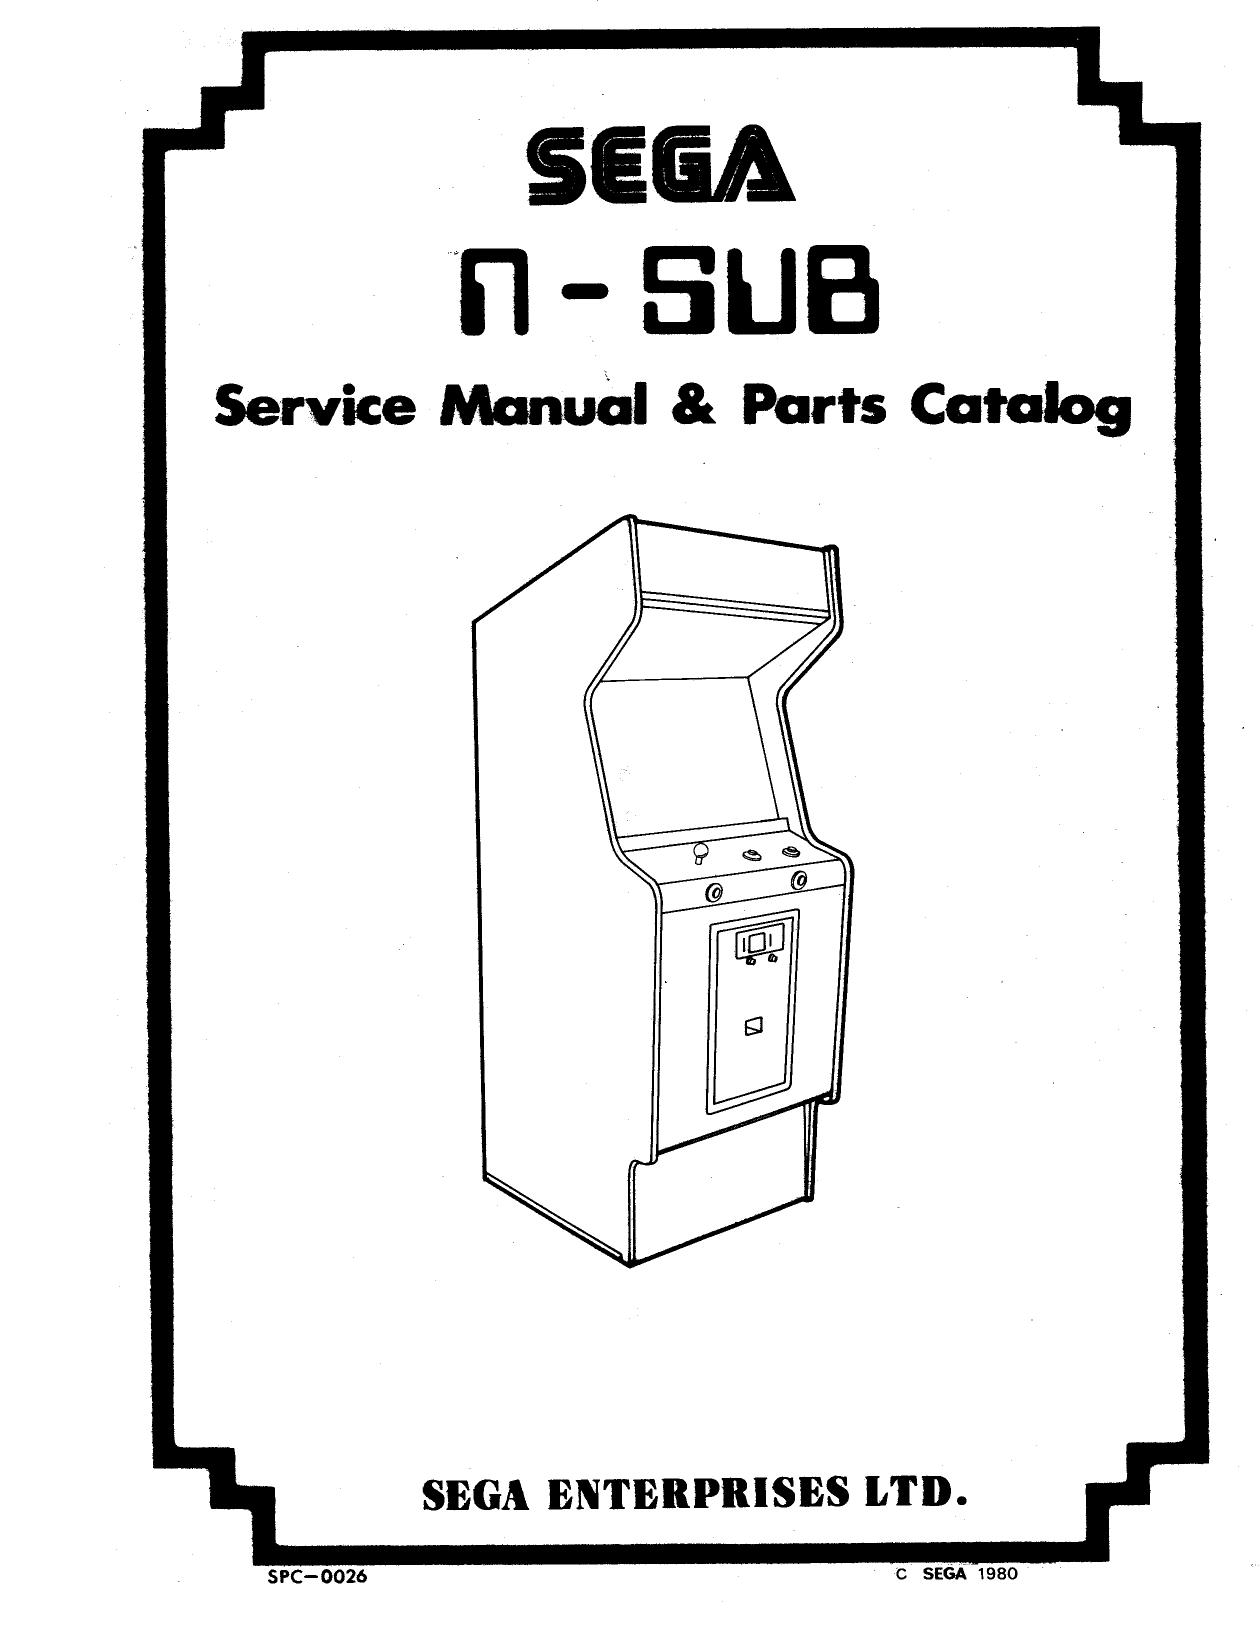 N-Sub (Service & Parts) (U)